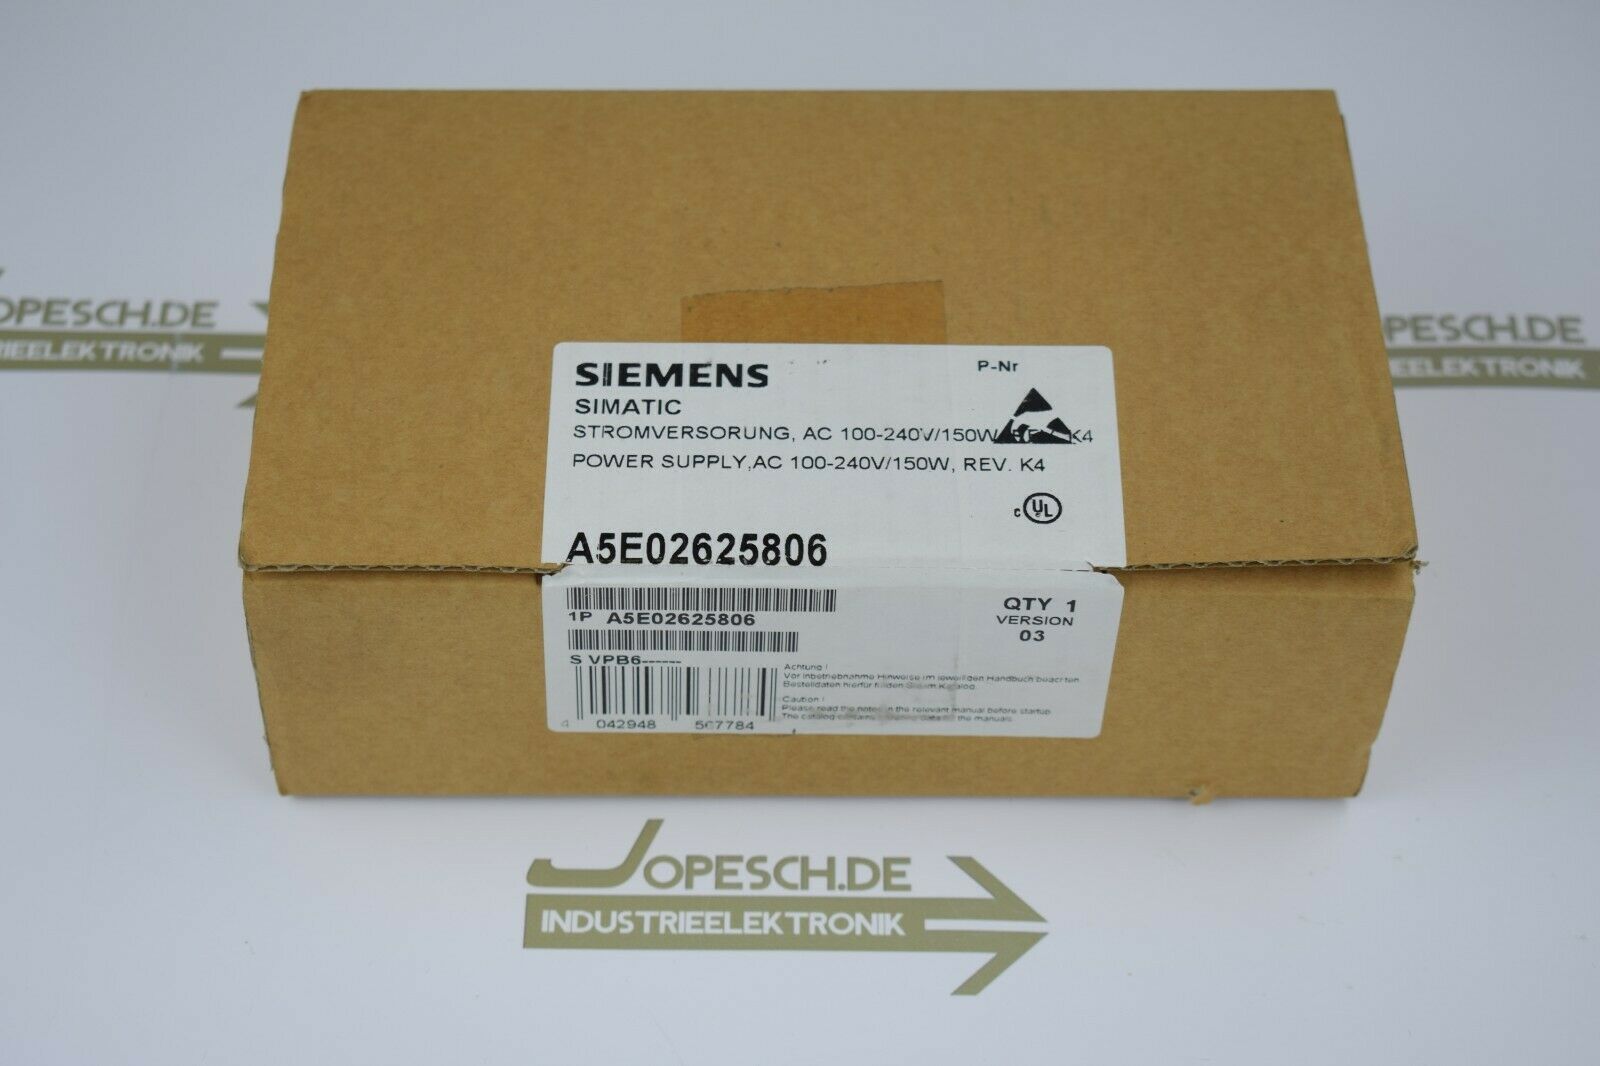 Siemens simatic power supply AC 100-240V / 150W A5E02625806